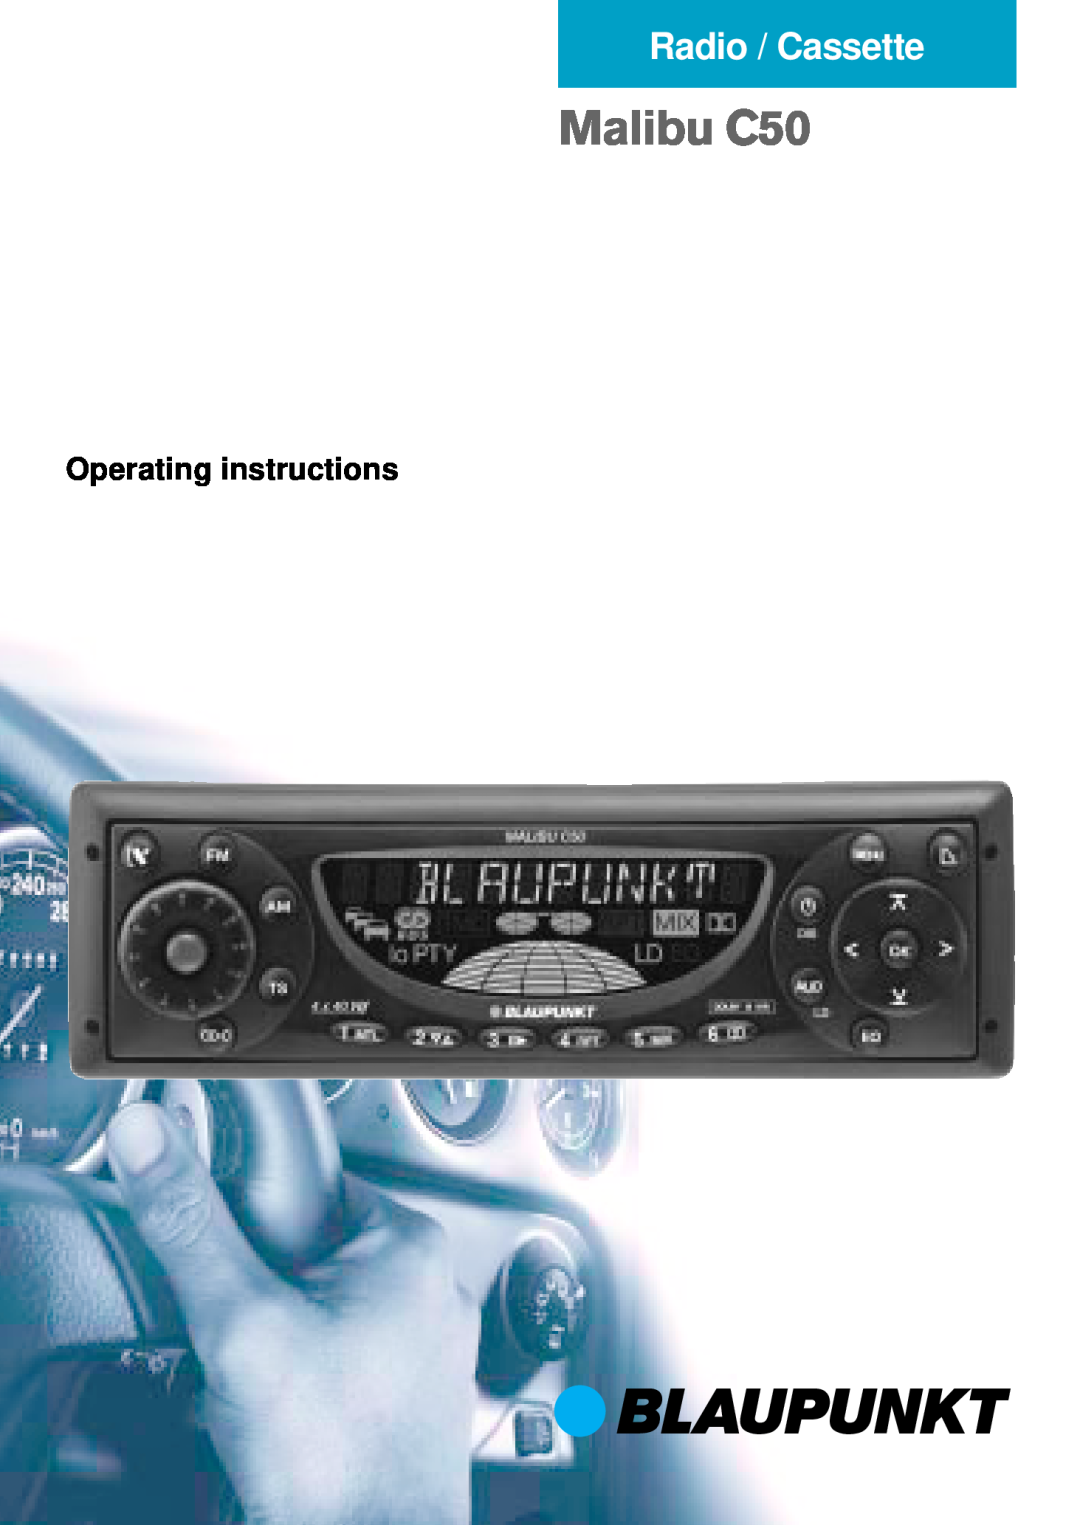 Blaupunkt operating instructions Operating instructions, Malibu C50, Radio / Cassette 